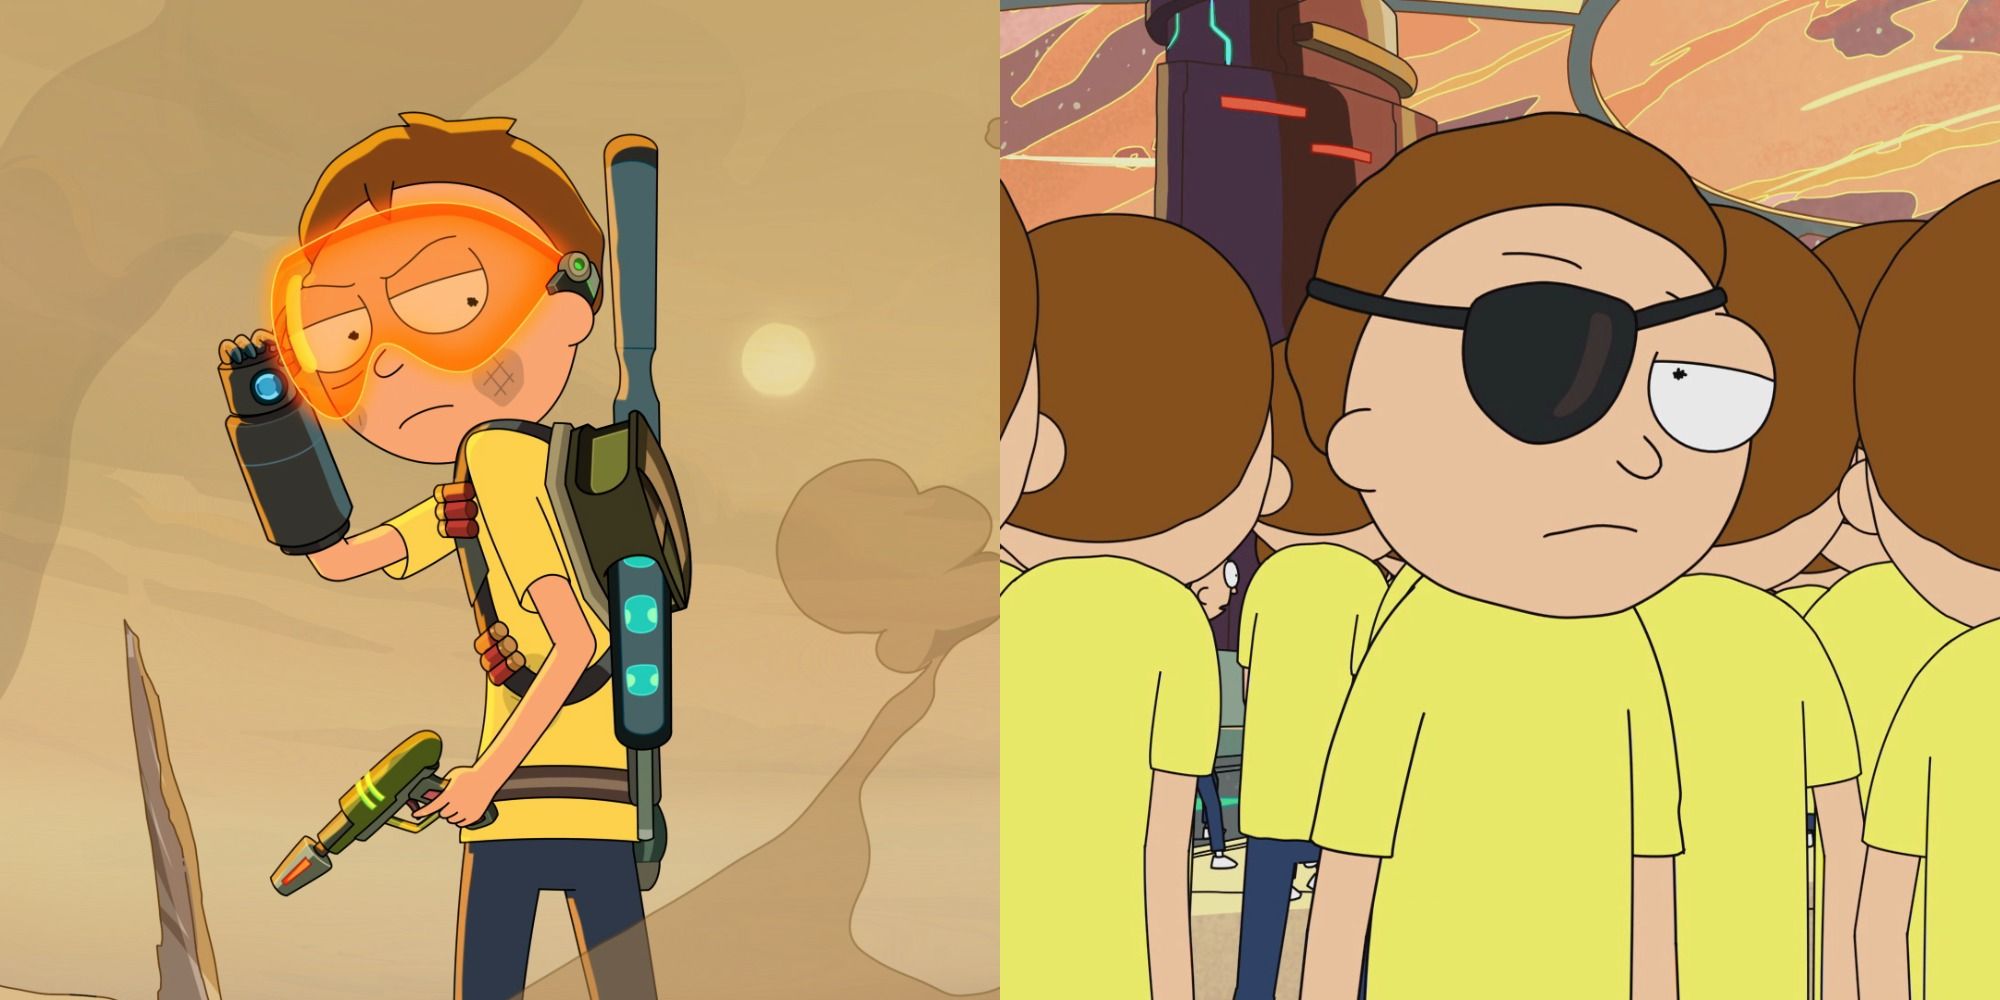 Split image showing Morty armed, and Evil Morty